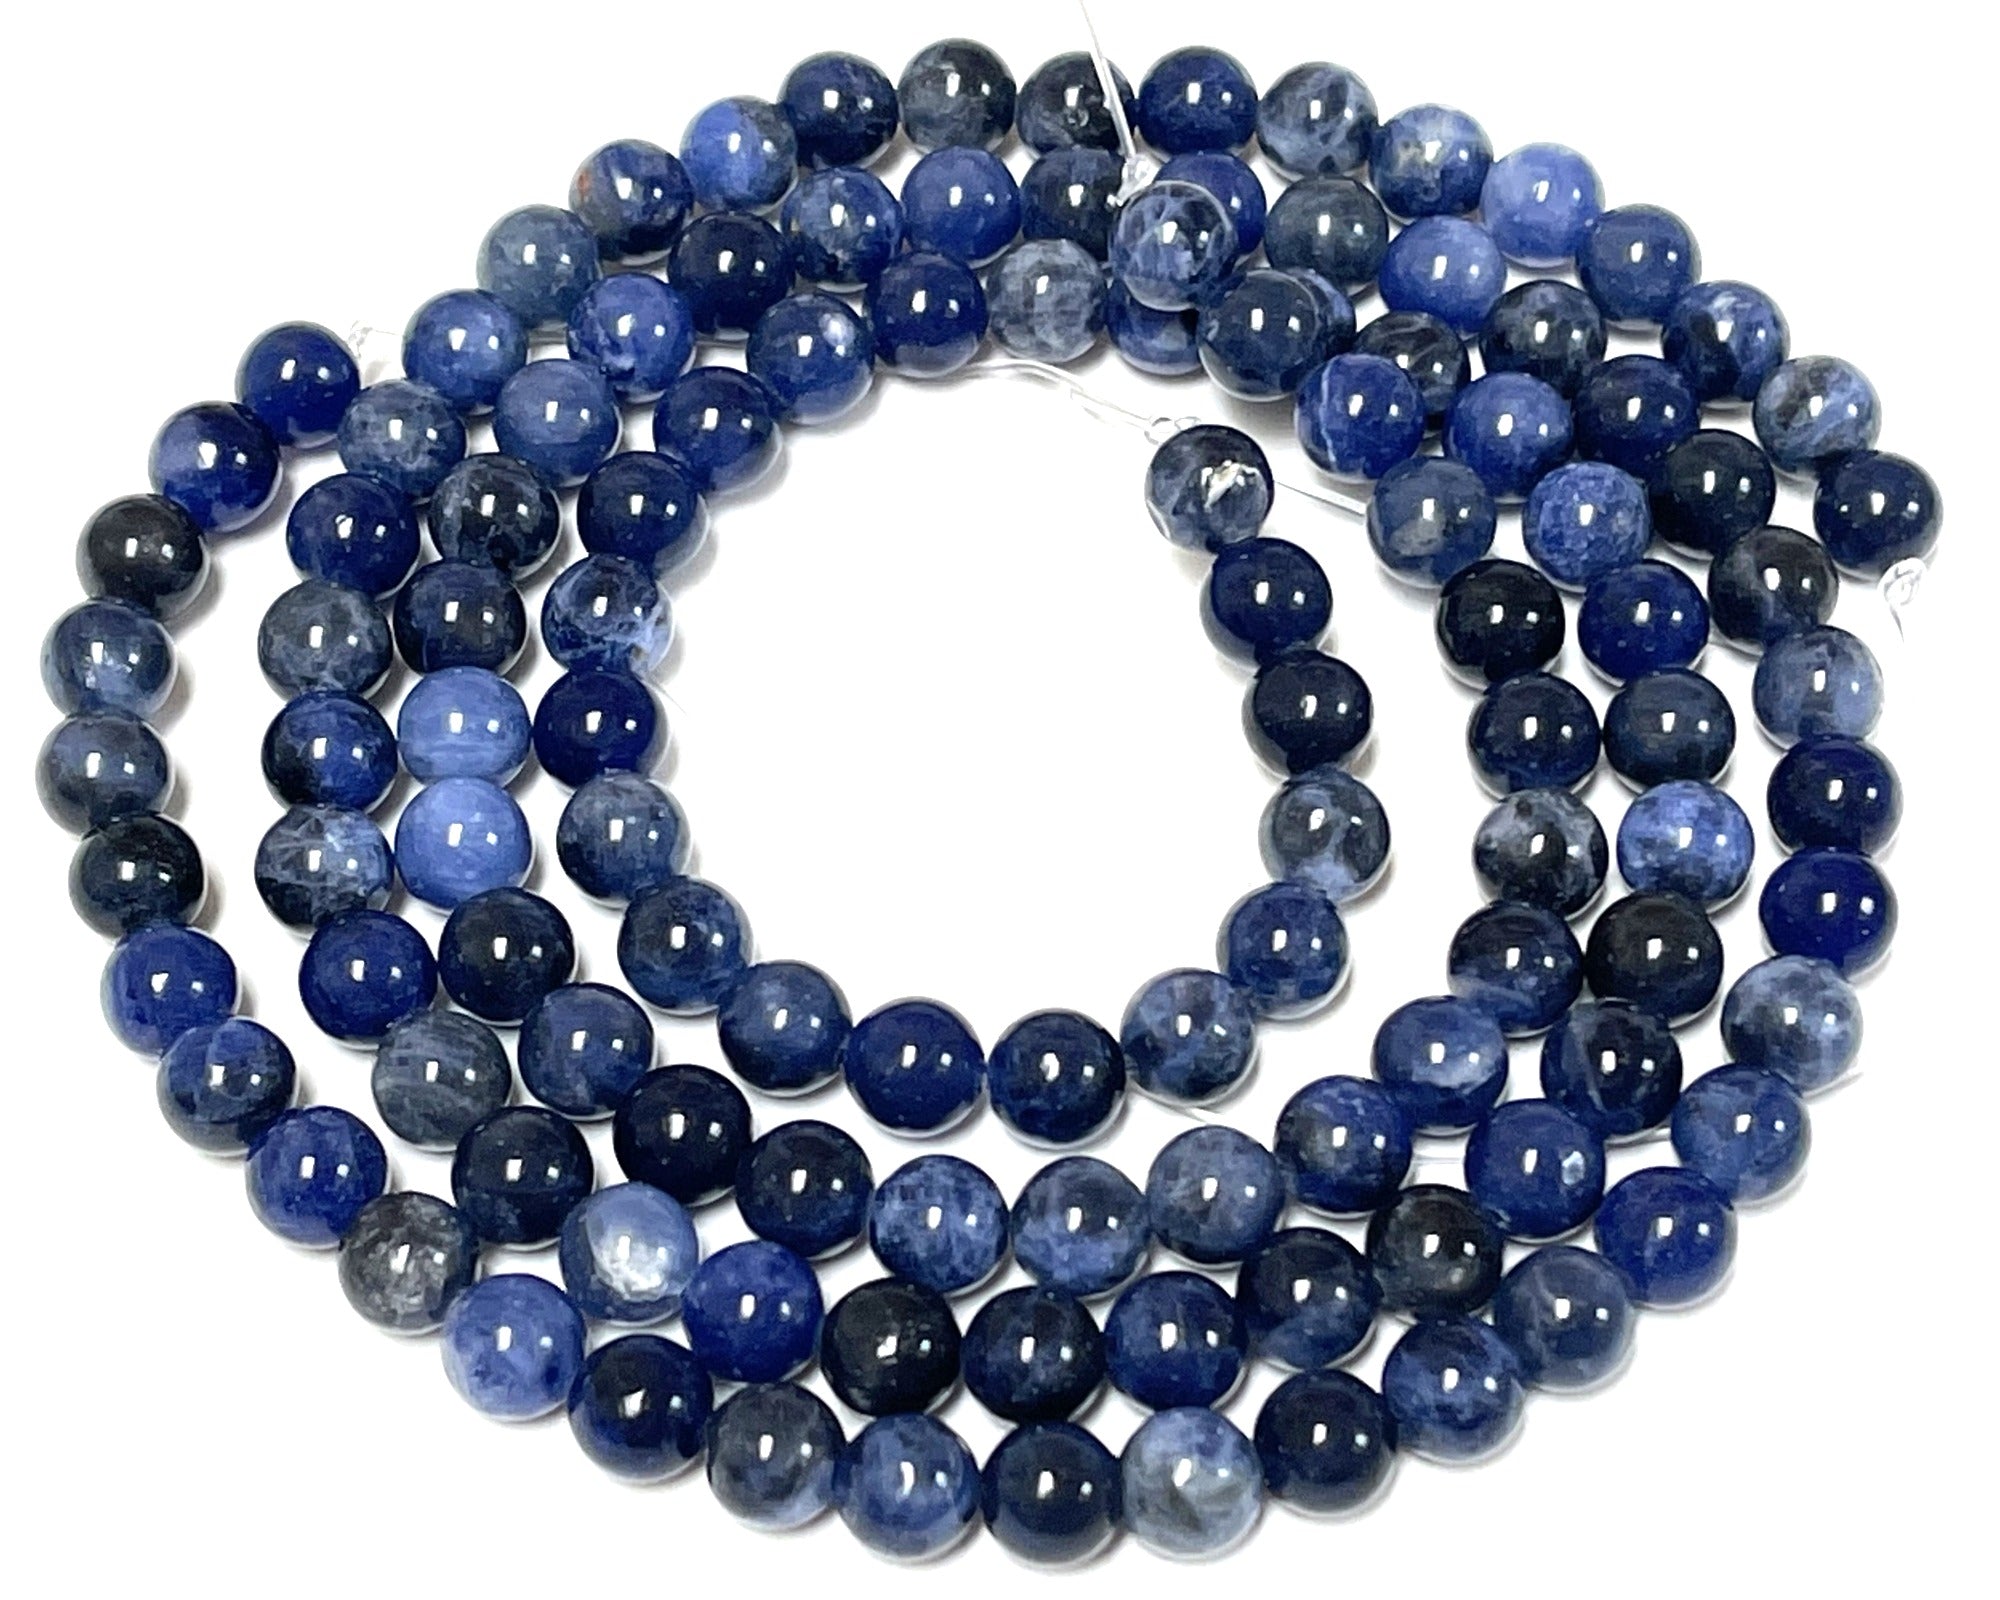 Blue Sodalite 6mm round polished natural gemstone beads 15" strand